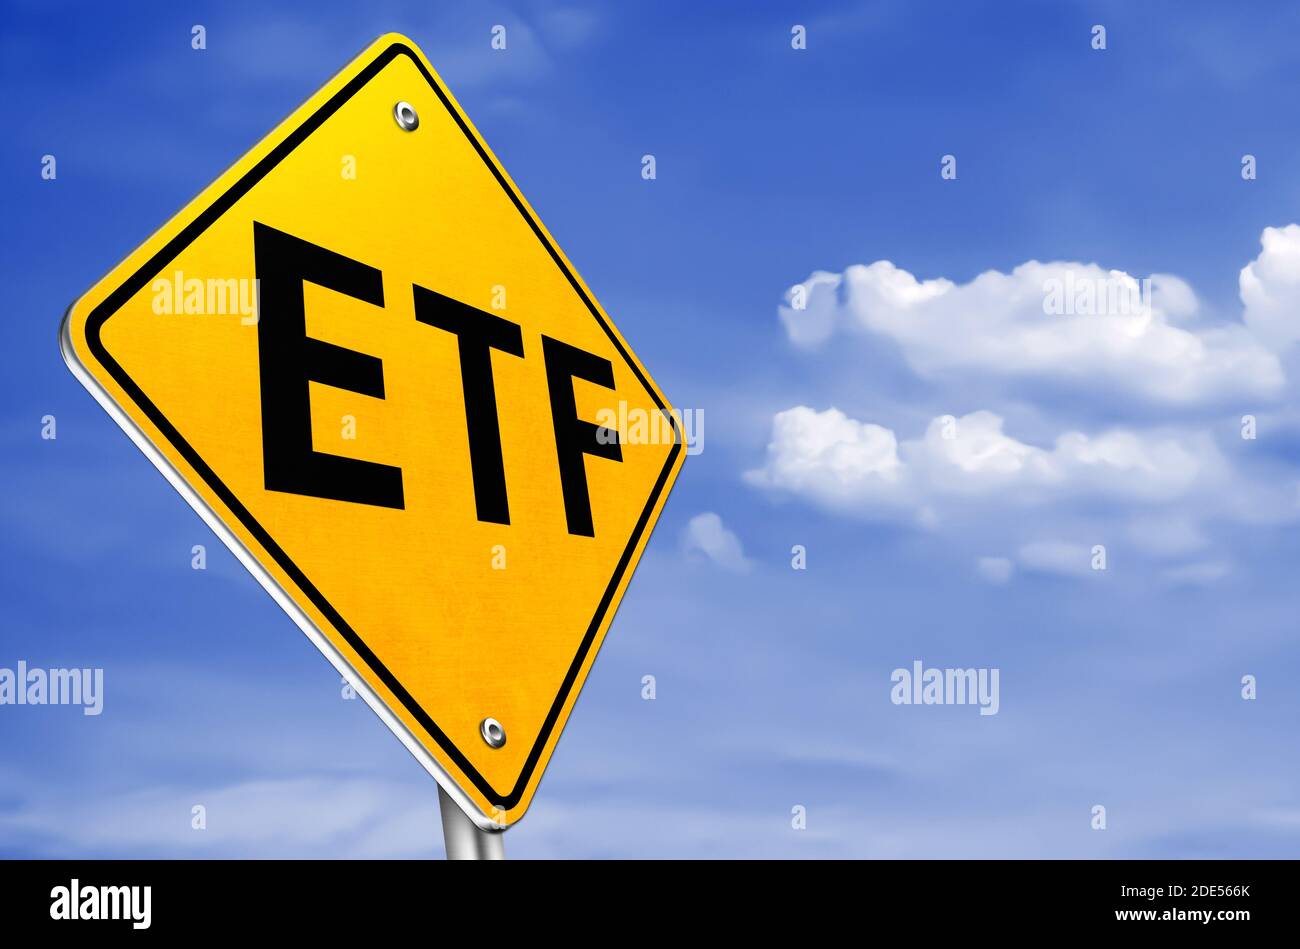 ETF - Exchange Trade Fund Stock Photo